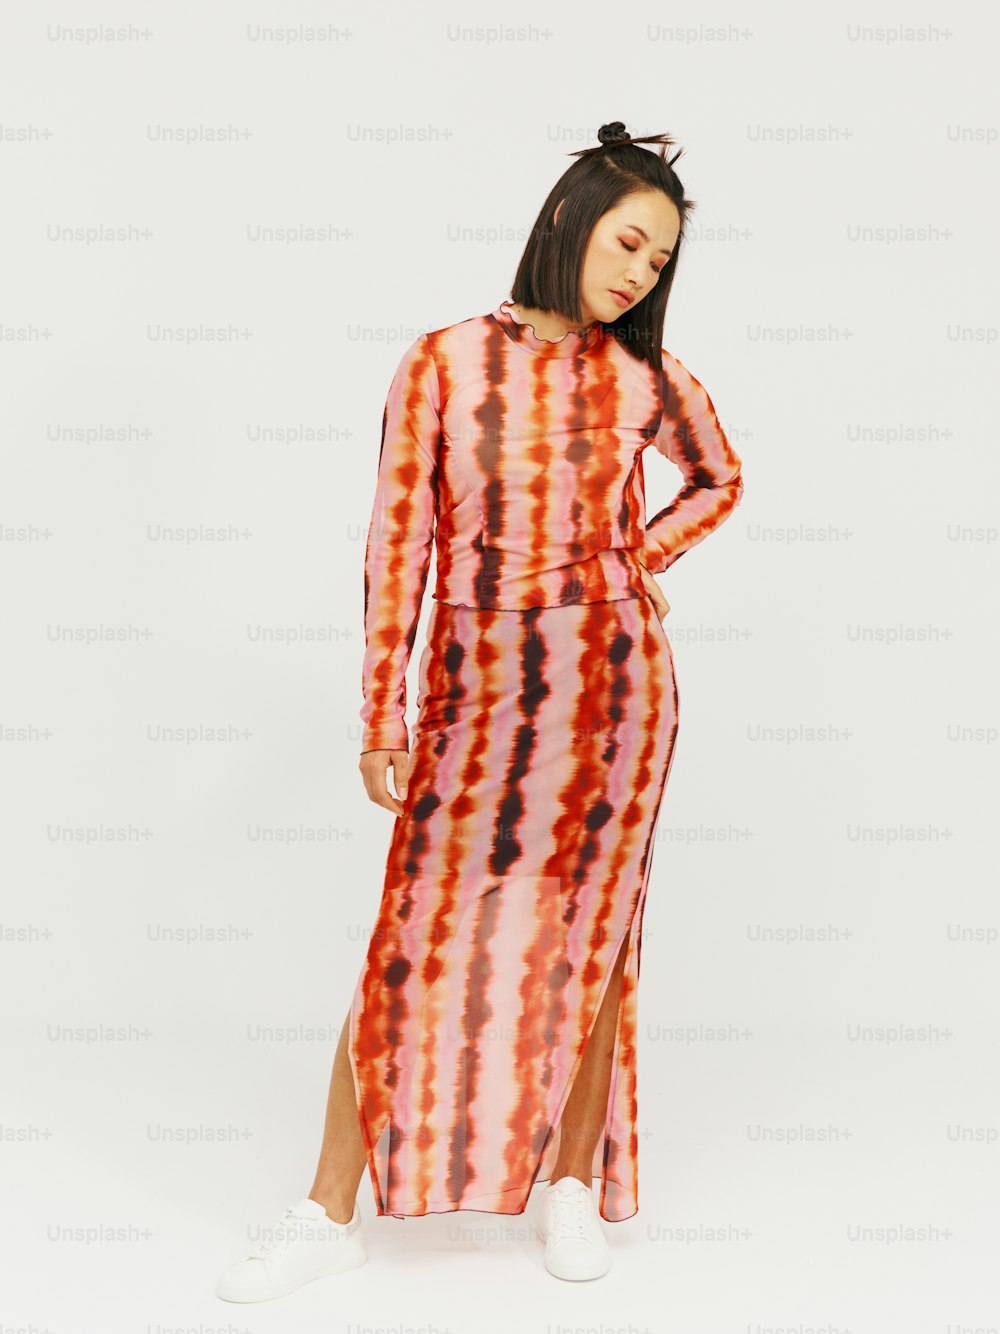 a woman wearing a long dress with a tie dye pattern